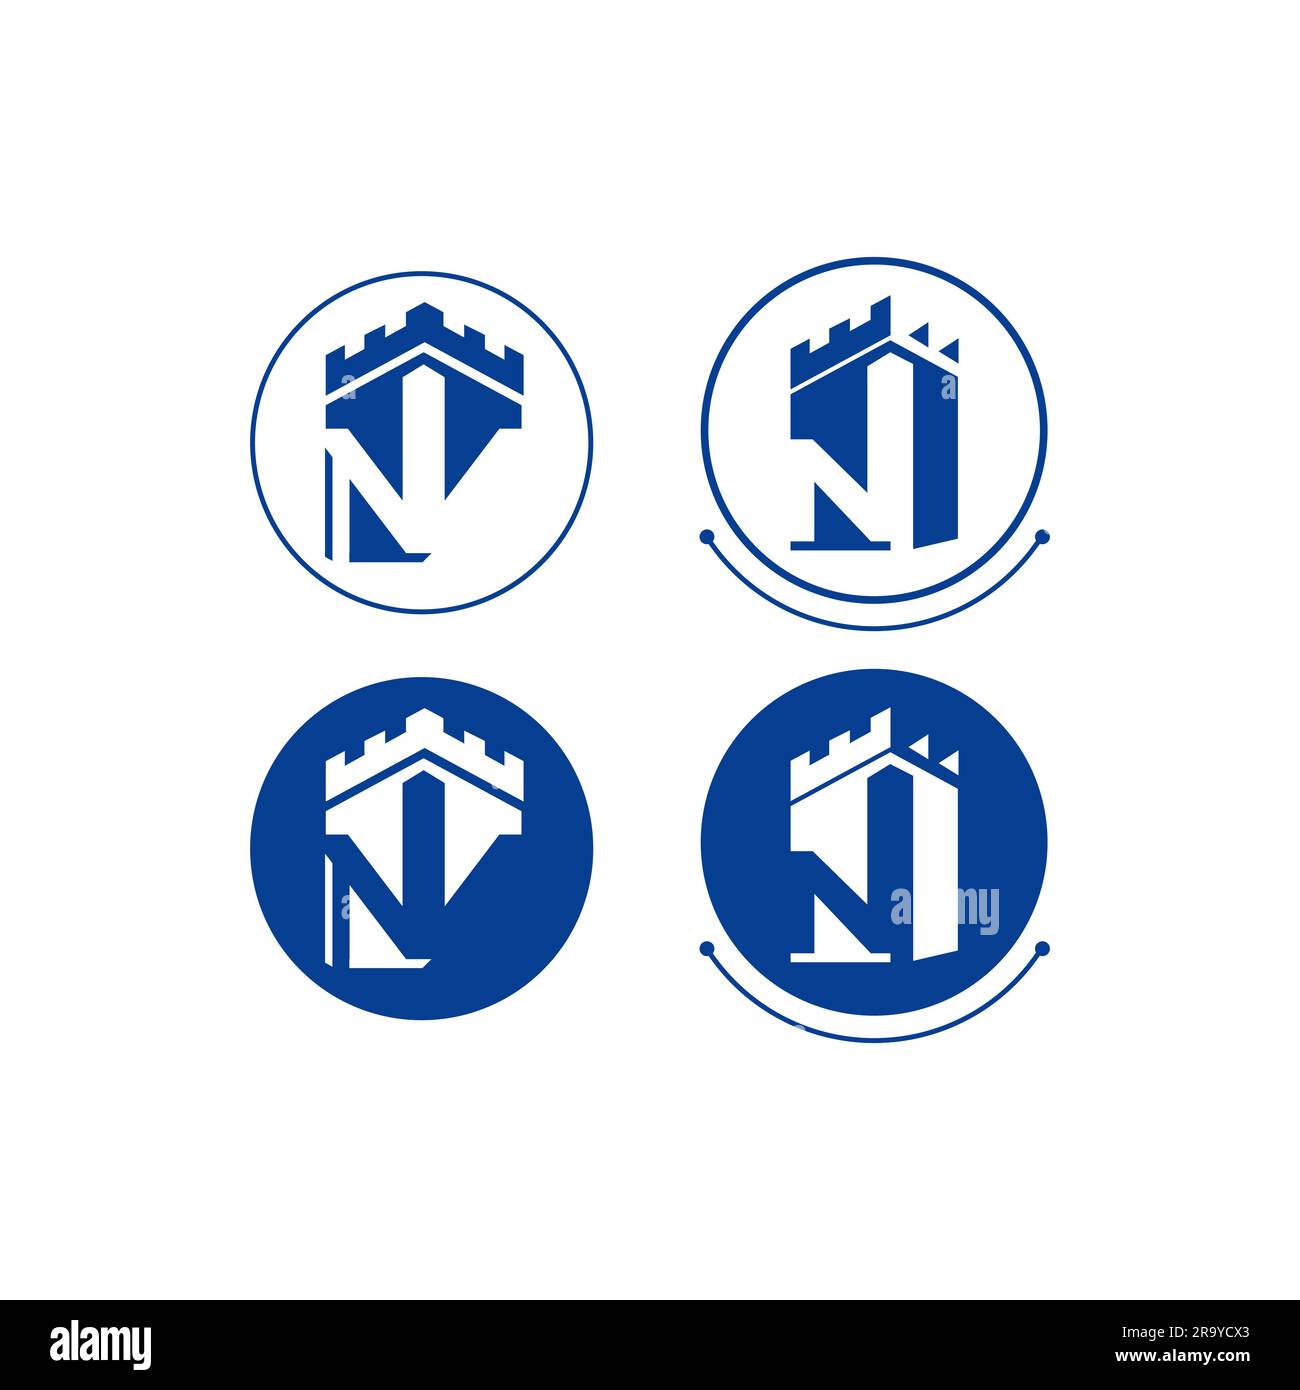 Castle with letter N vector logo design. Castle building logo design concept. Stock Vector